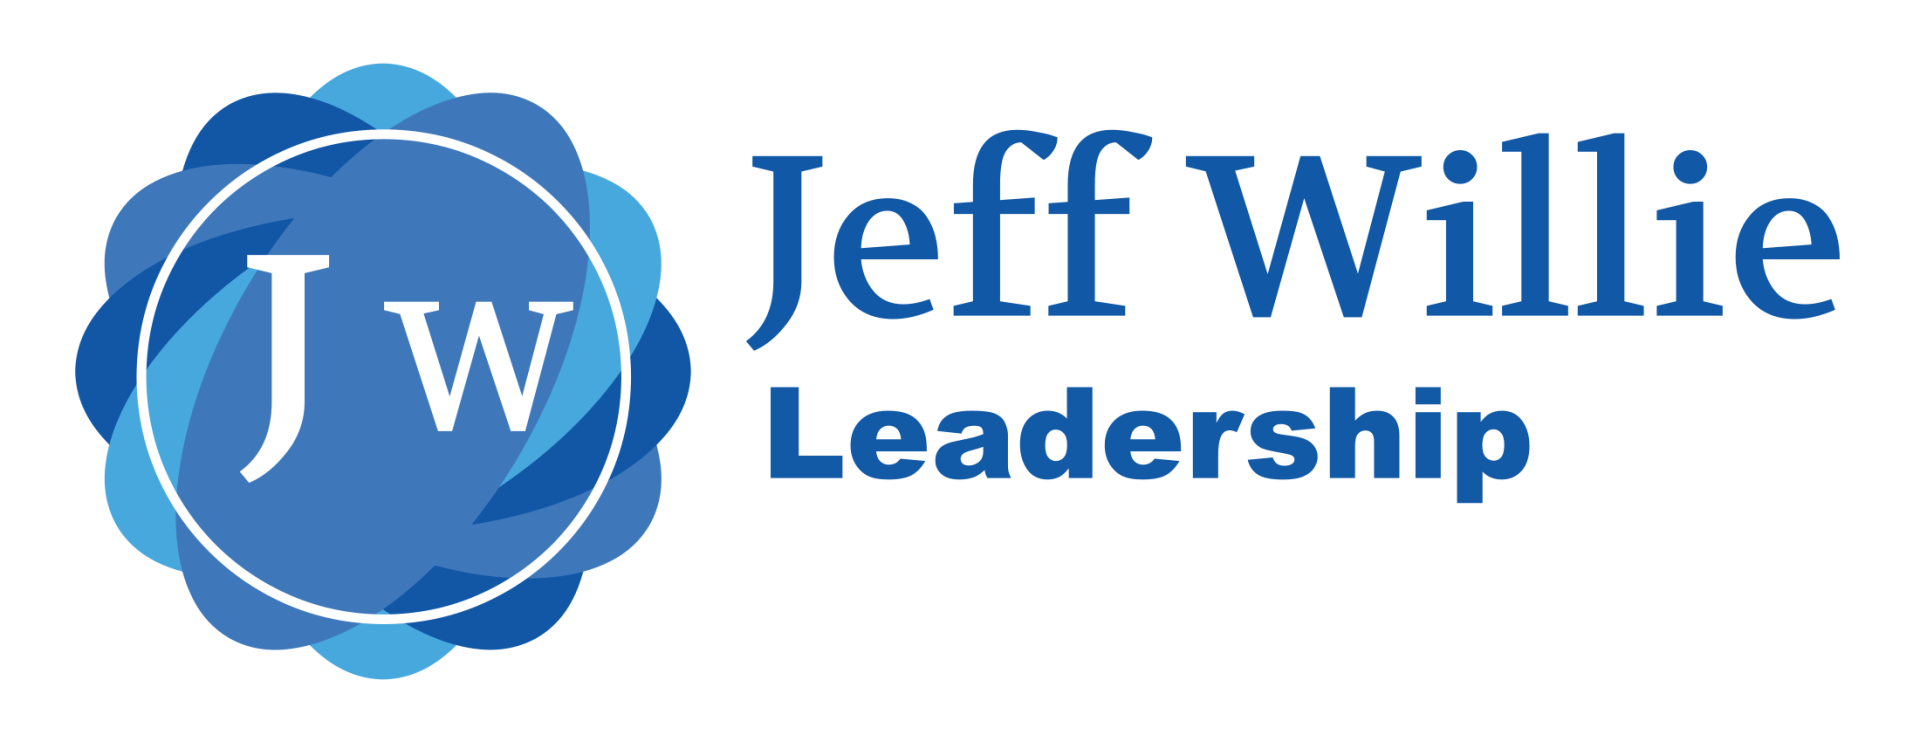 Jeff Willie Leadership Logo